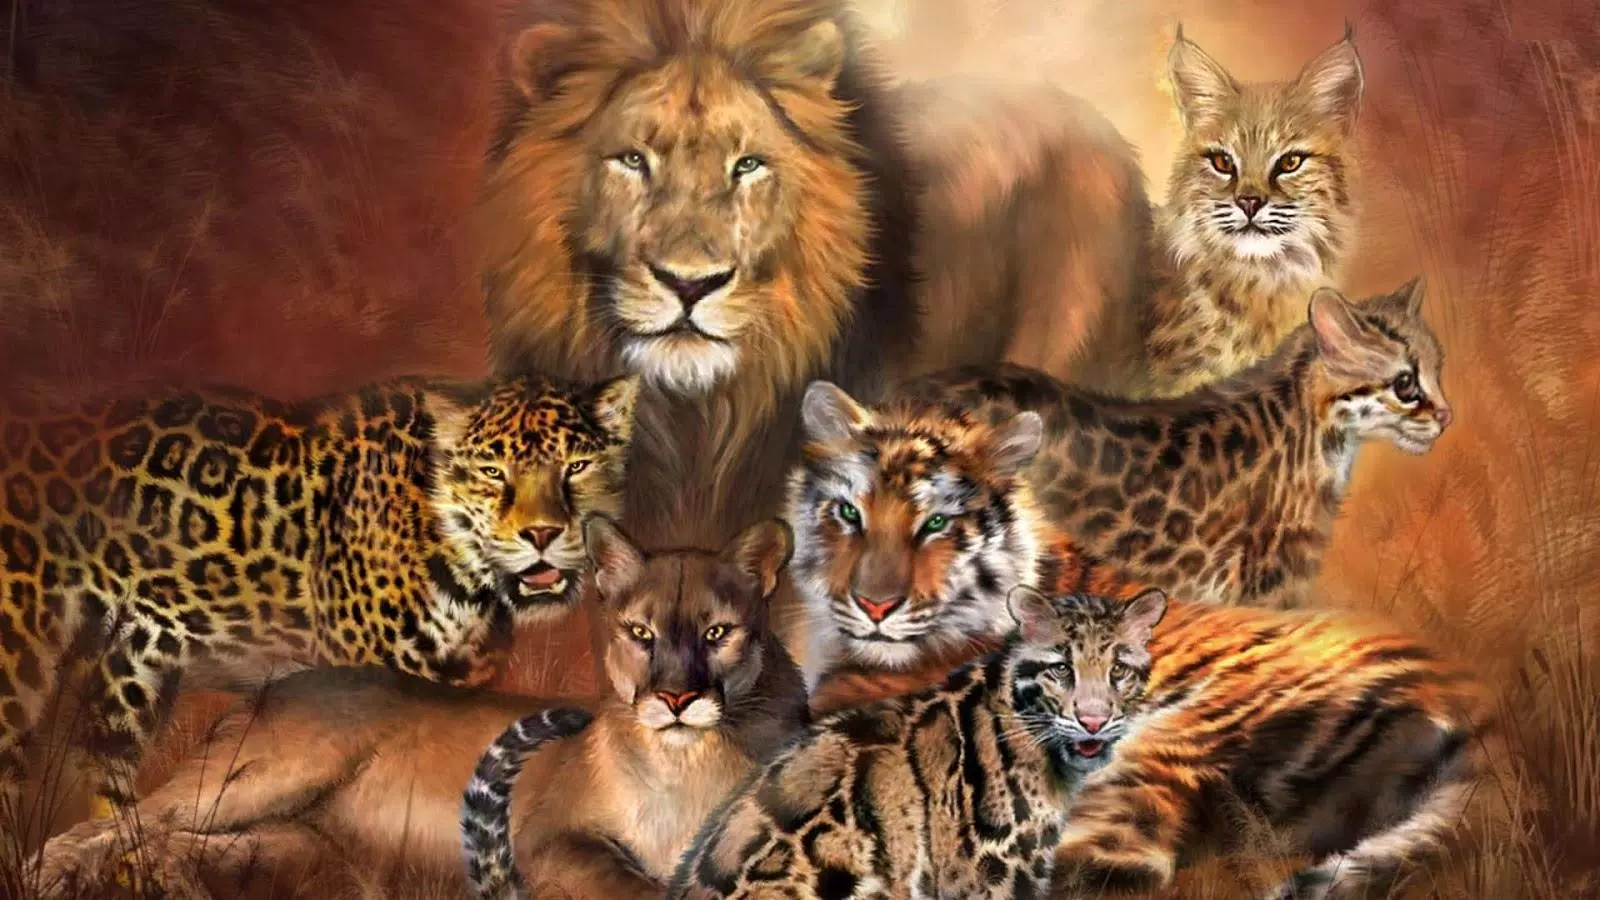 Tiger Versus Lion Wallpaper APK for Android Download